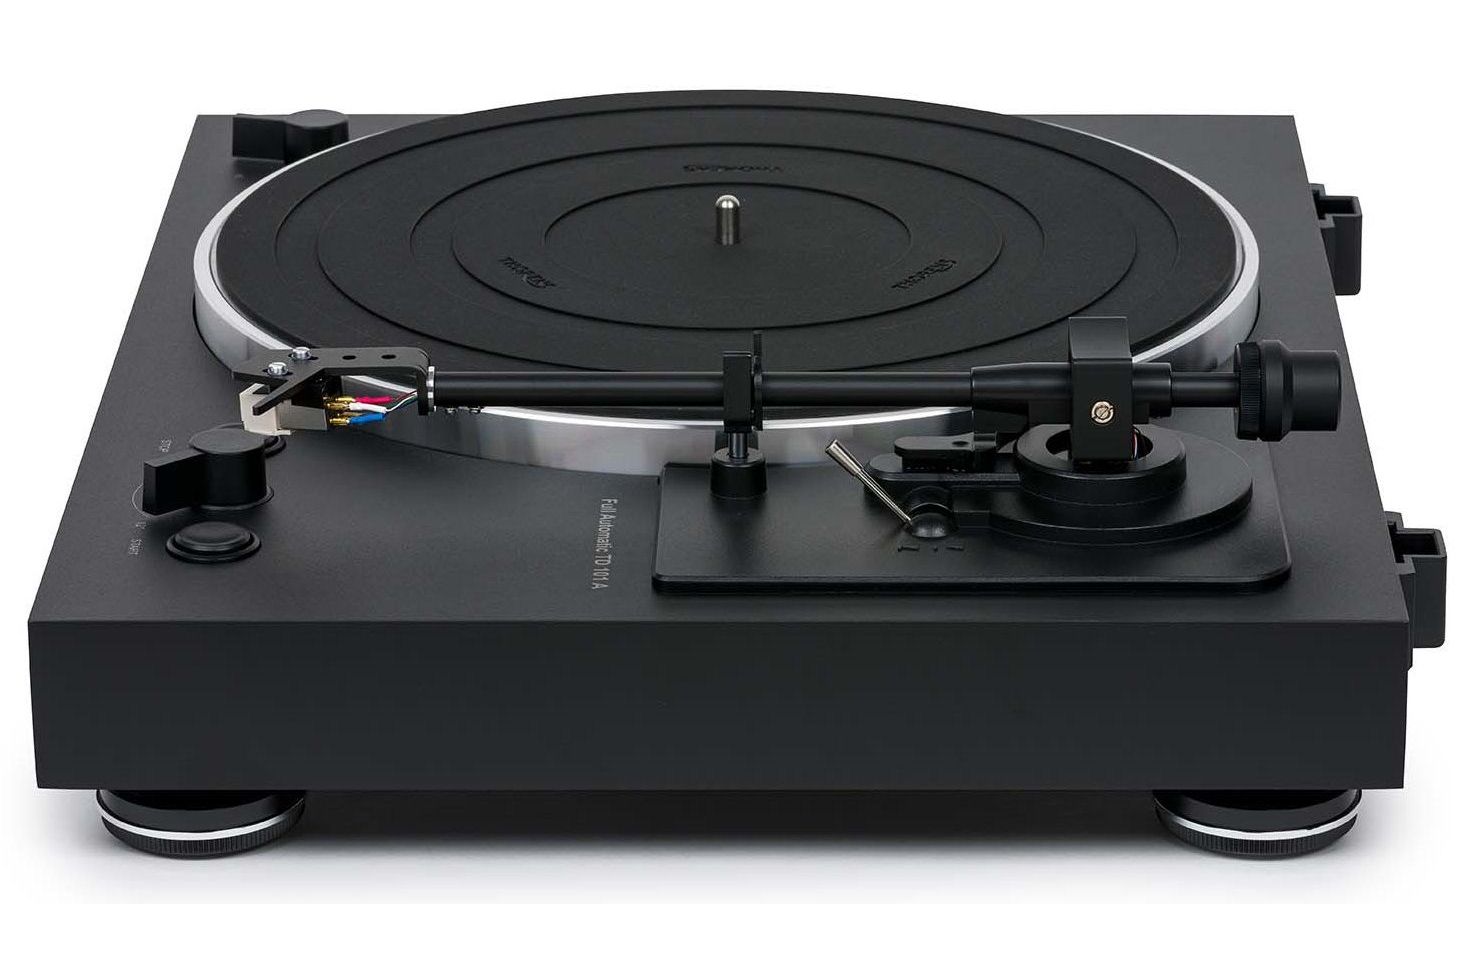 Vinyl Thorens TD 101 A helautomatisk skivspelare